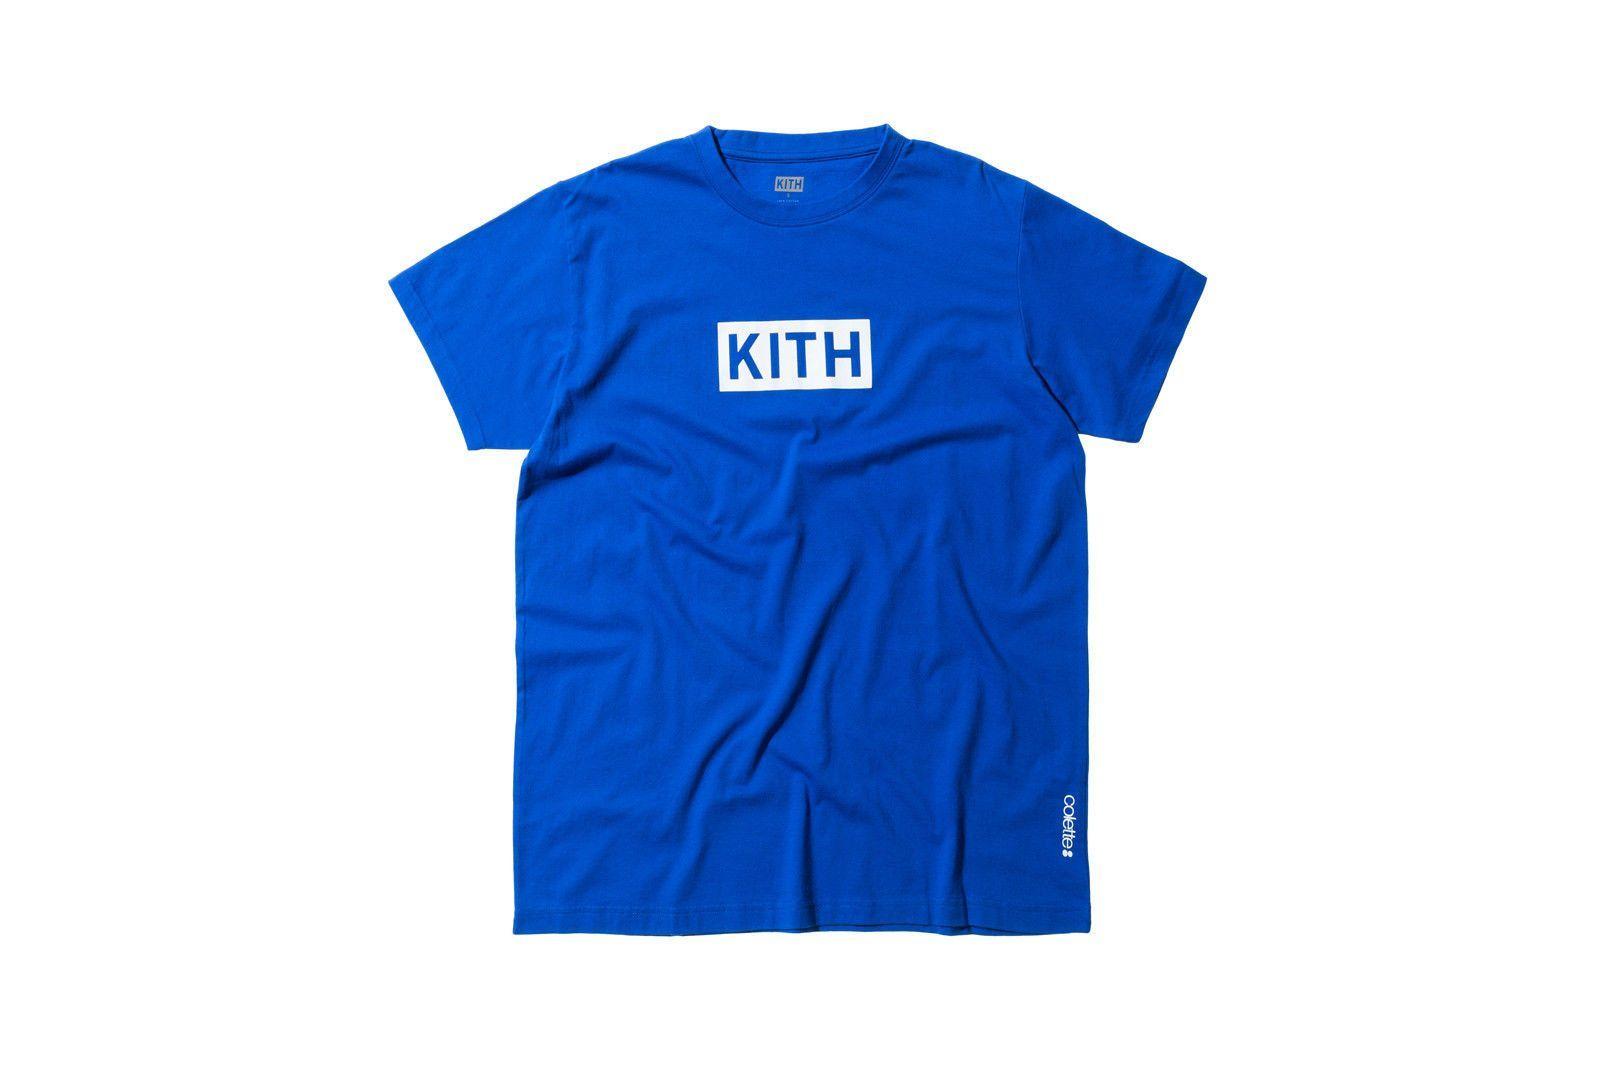 White a Blue Box Logo - KITH X Colette Box Logo T Shirt Blue Tee White Large L 150 GSM